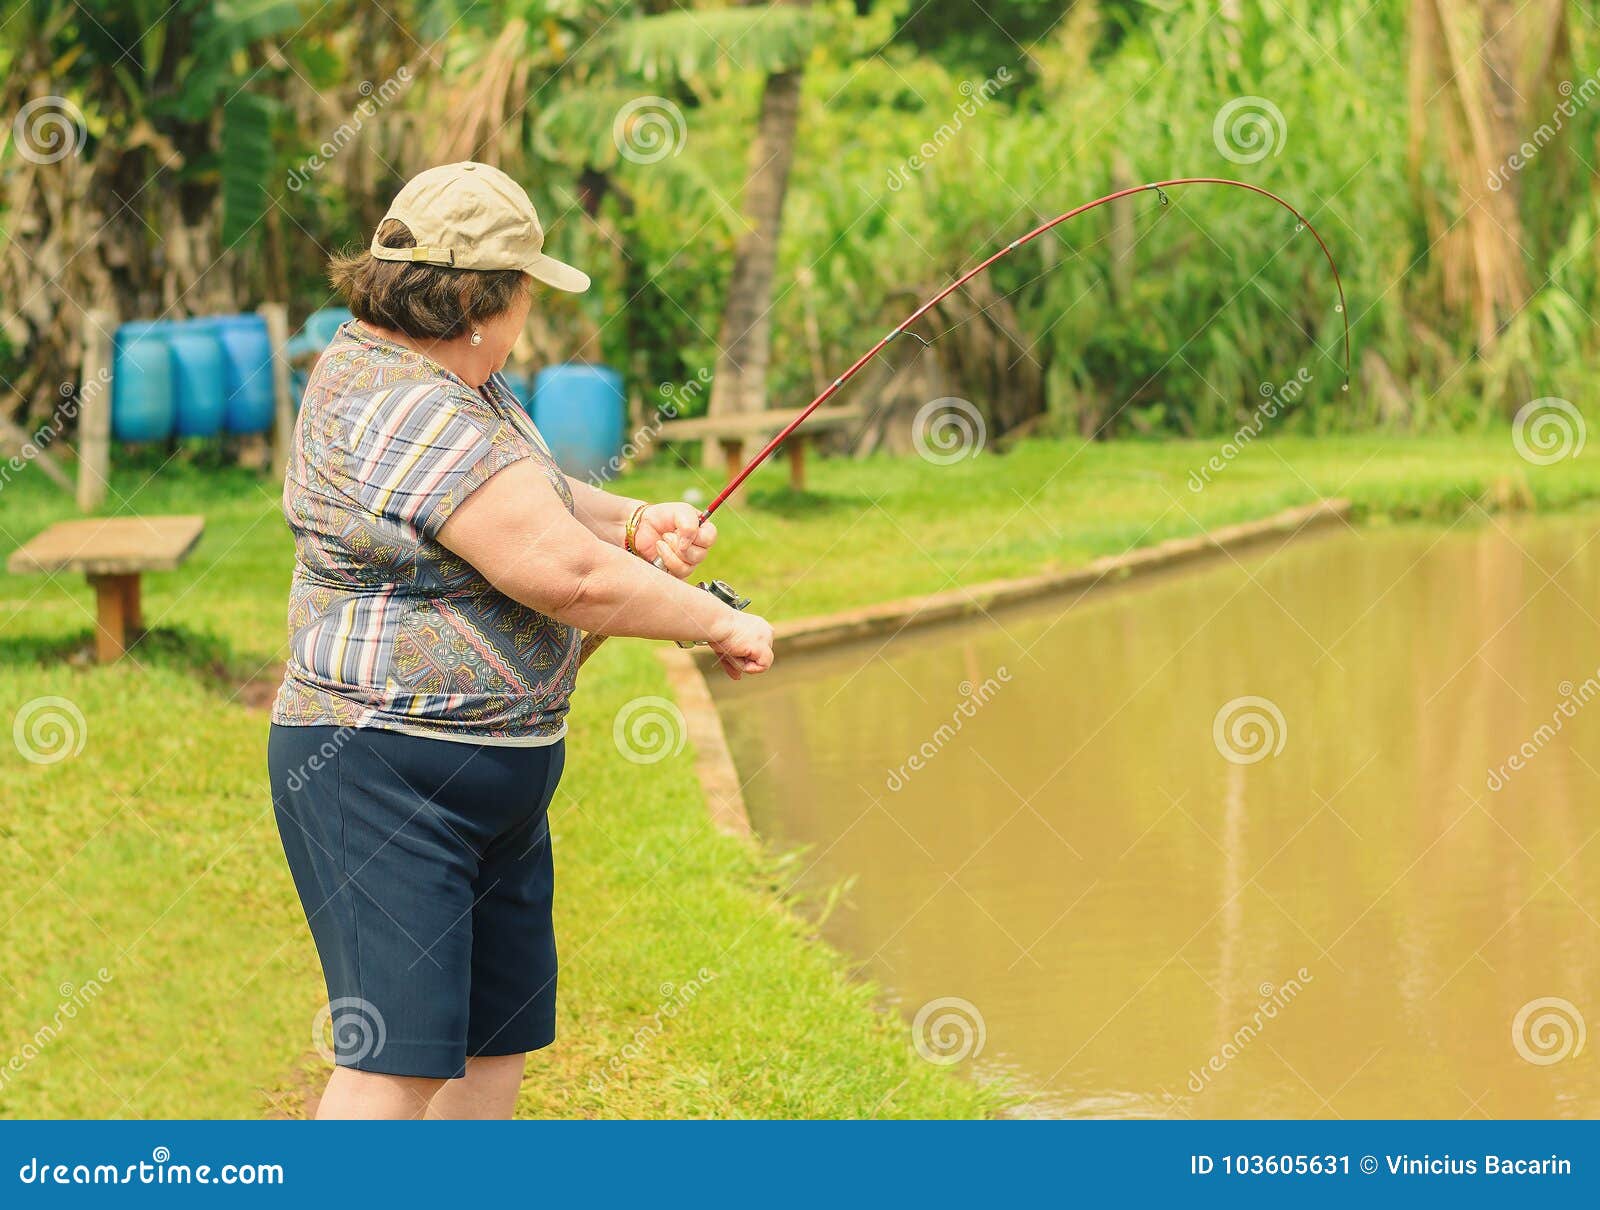 https://thumbs.dreamstime.com/z/old-woman-holding-fishing-rod-hooking-fish-lake-brazilian-descendant-japanese-103605631.jpg